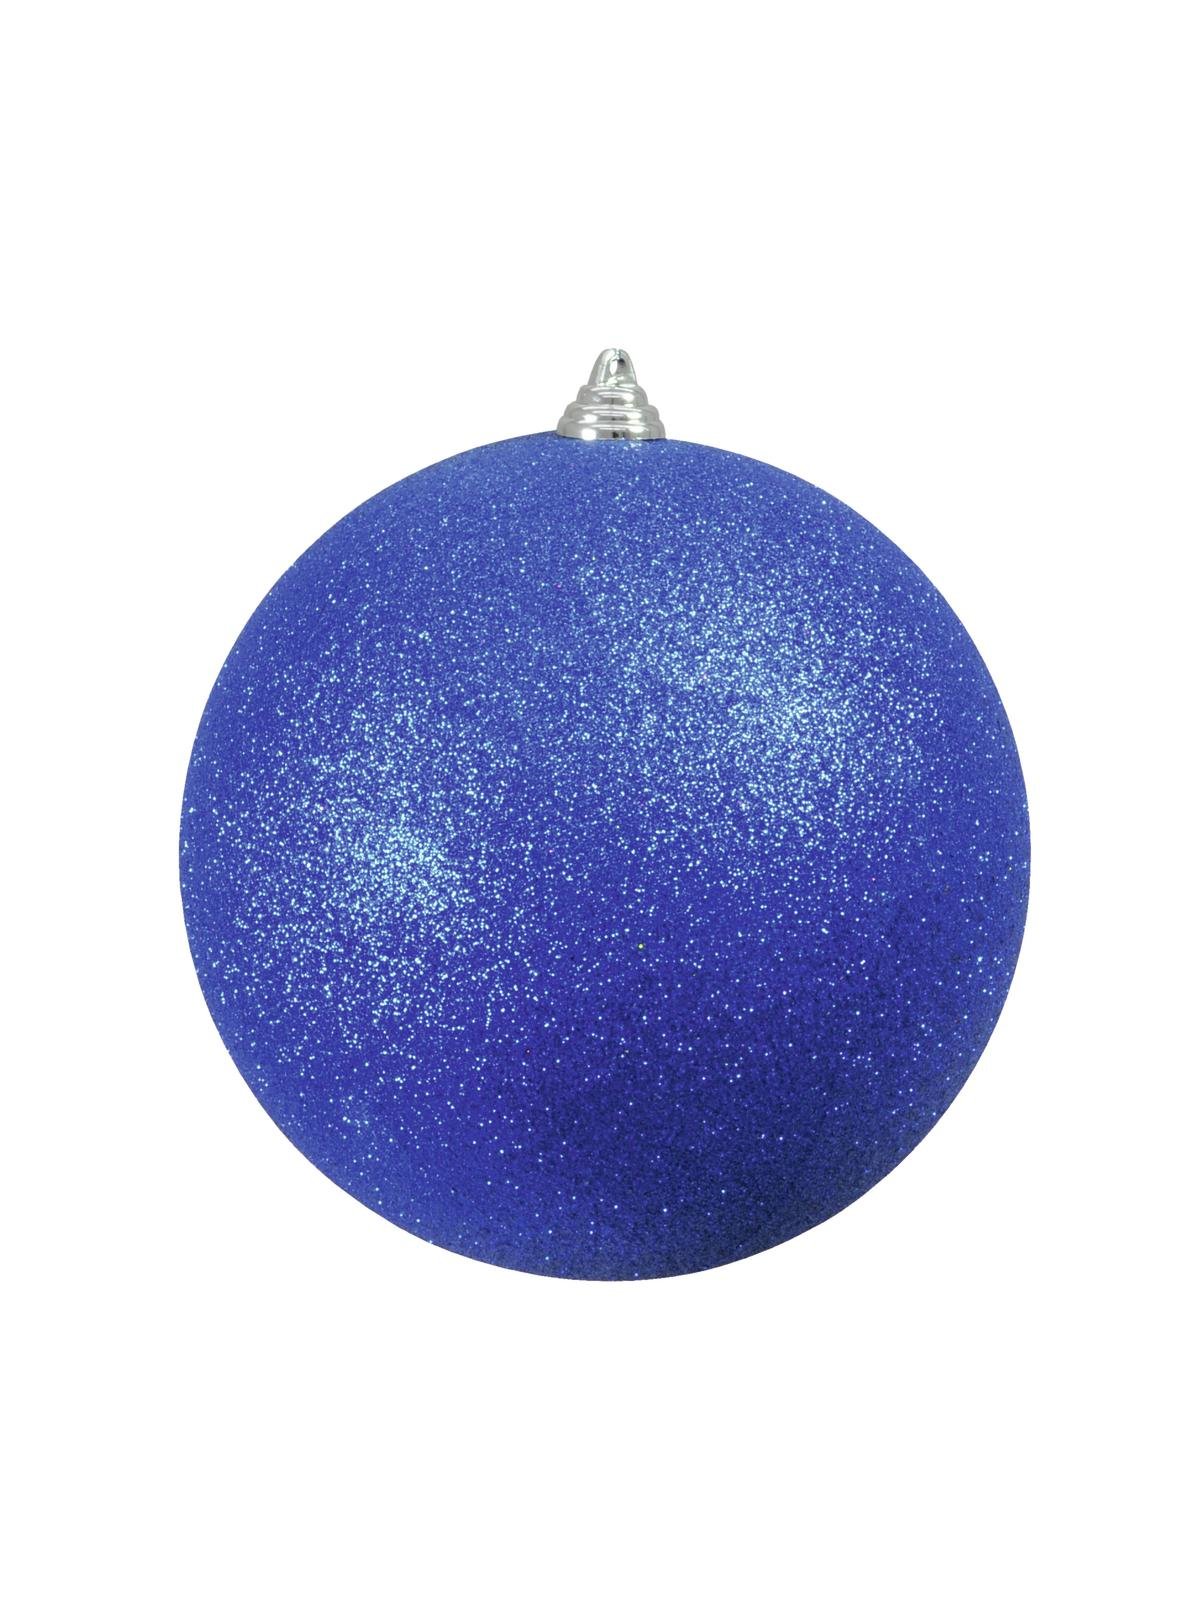 EUROPALMS Deco Ball 20cm, blue, glitter